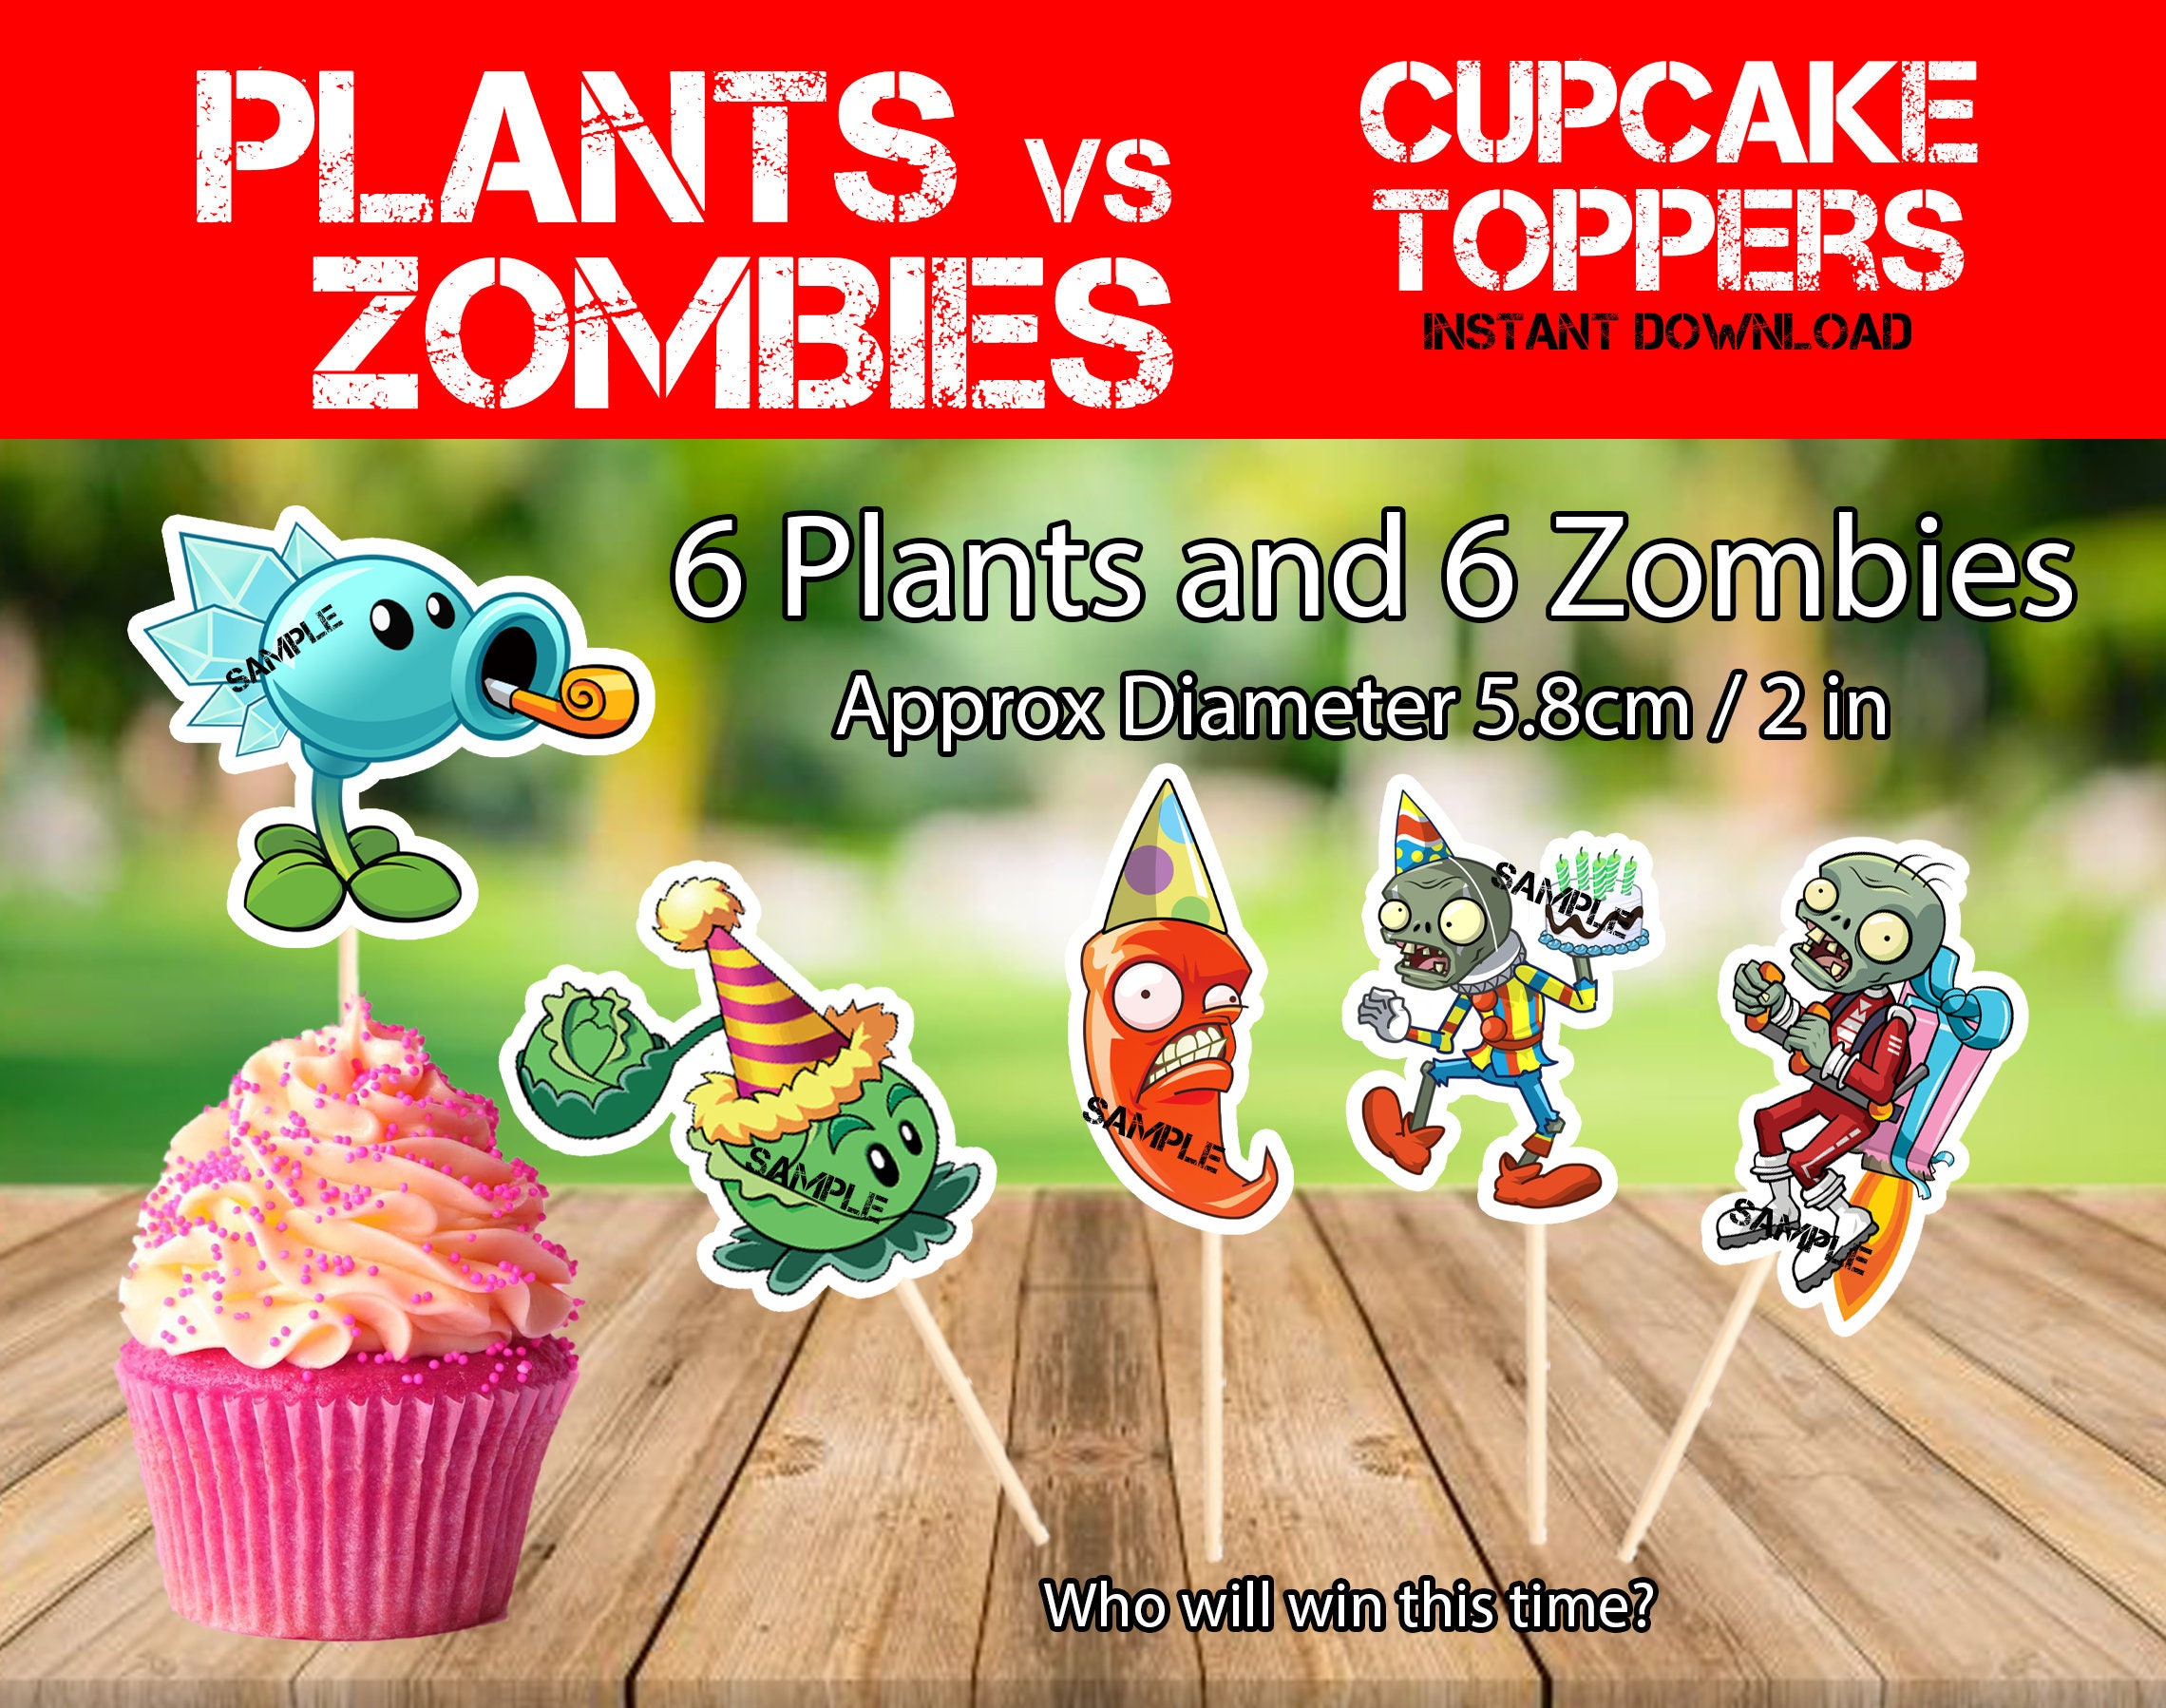 Plants vs Zombies SVG, Plants vs Zombies Bundle SVG, Cricut - Inspire Uplift